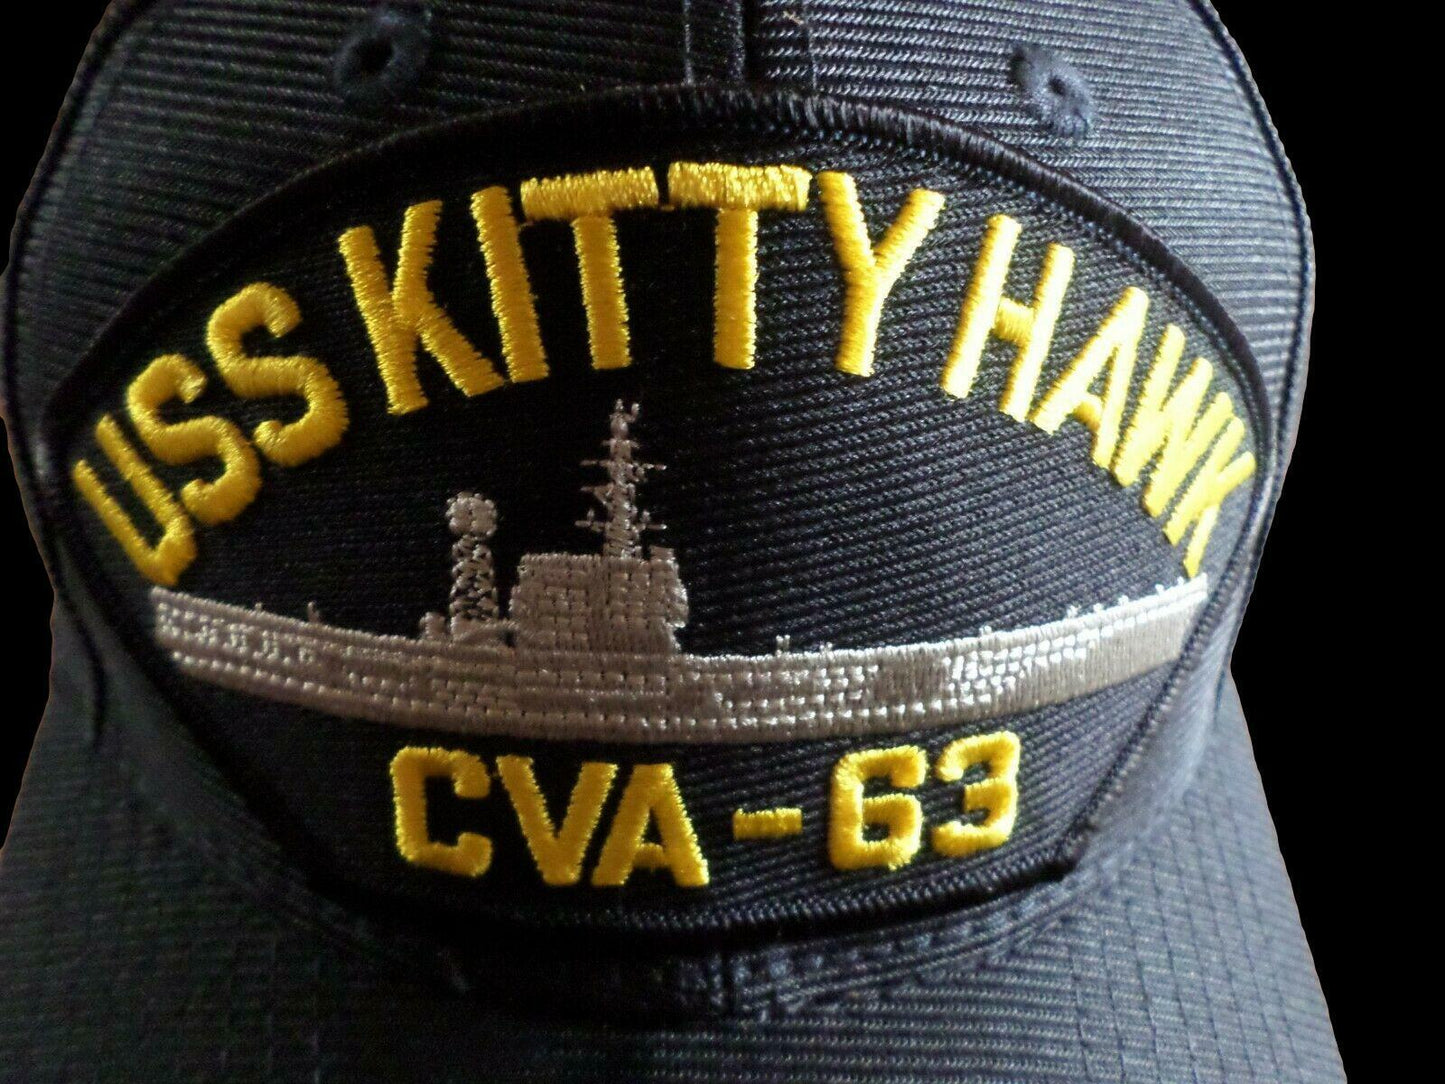 USS KITTY HAWK CVA-63 NAVY SHIP HAT U.S MILITARY OFFICIAL BALL CAP U.S.A MADE